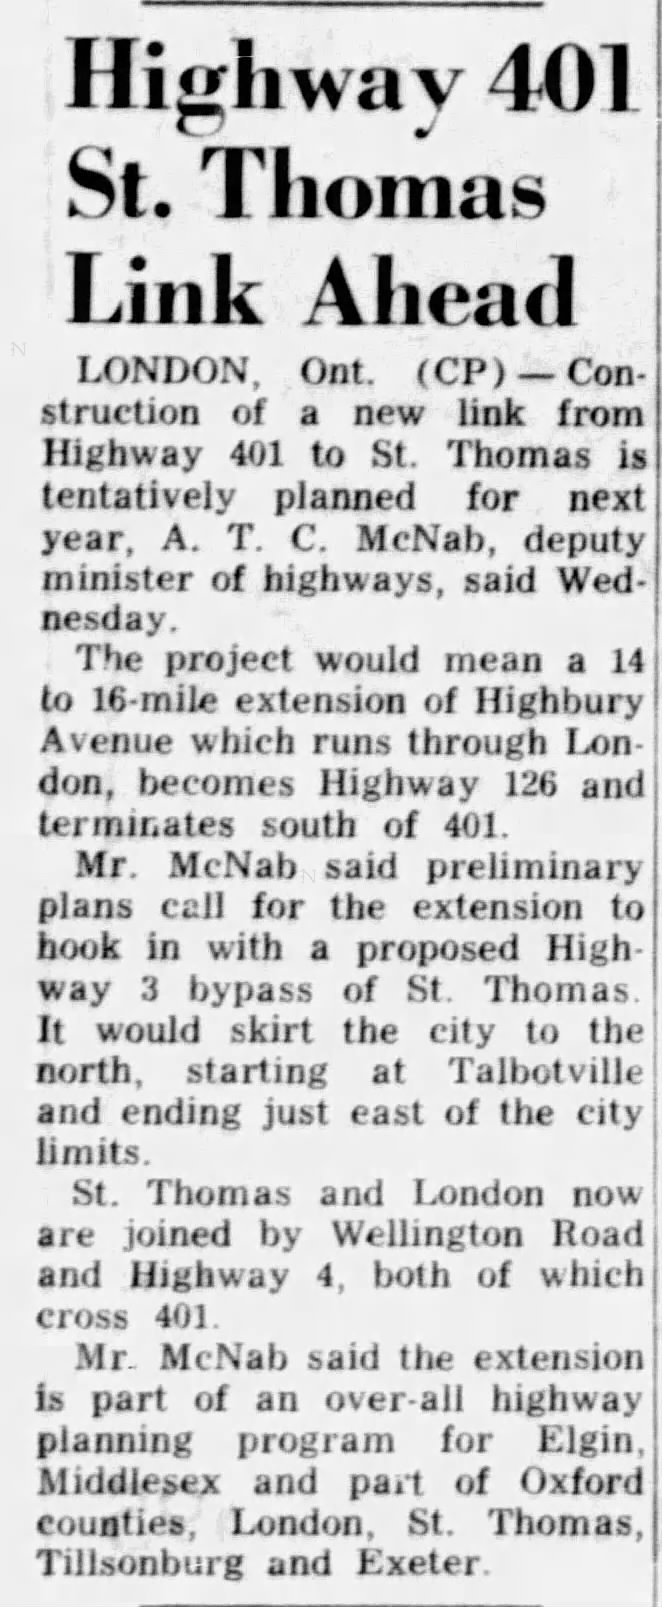 Highway 401 St. Thomas Link Ahead